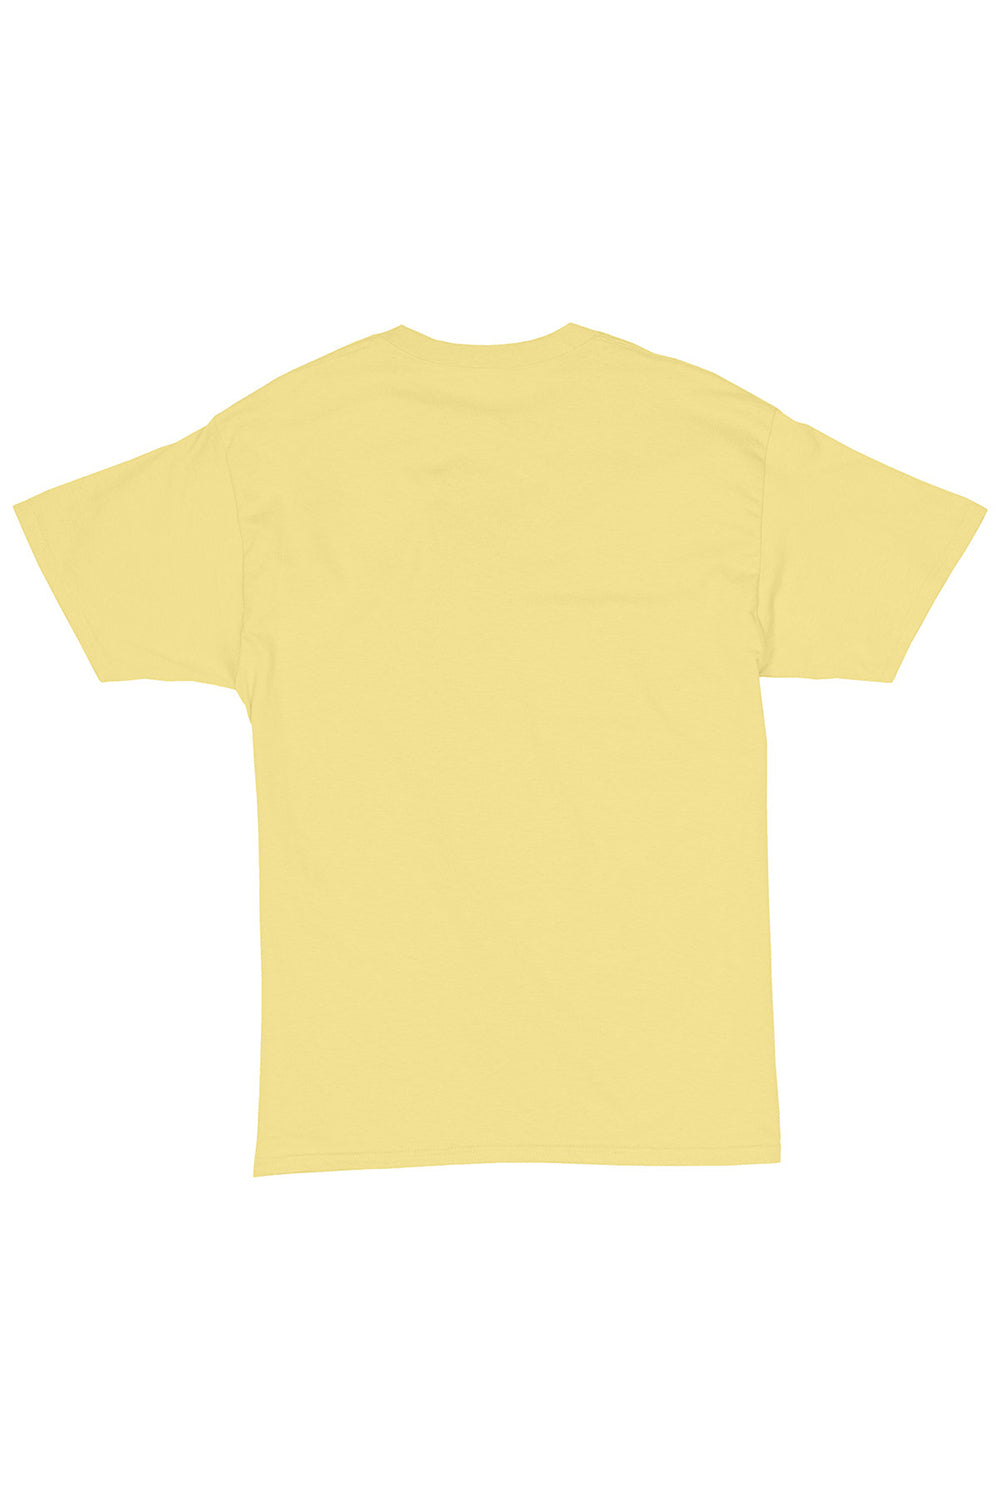 Hanes 5280 Mens ComfortSoft Short Sleeve Crewneck T-Shirt Daffodil Yellow Flat Back